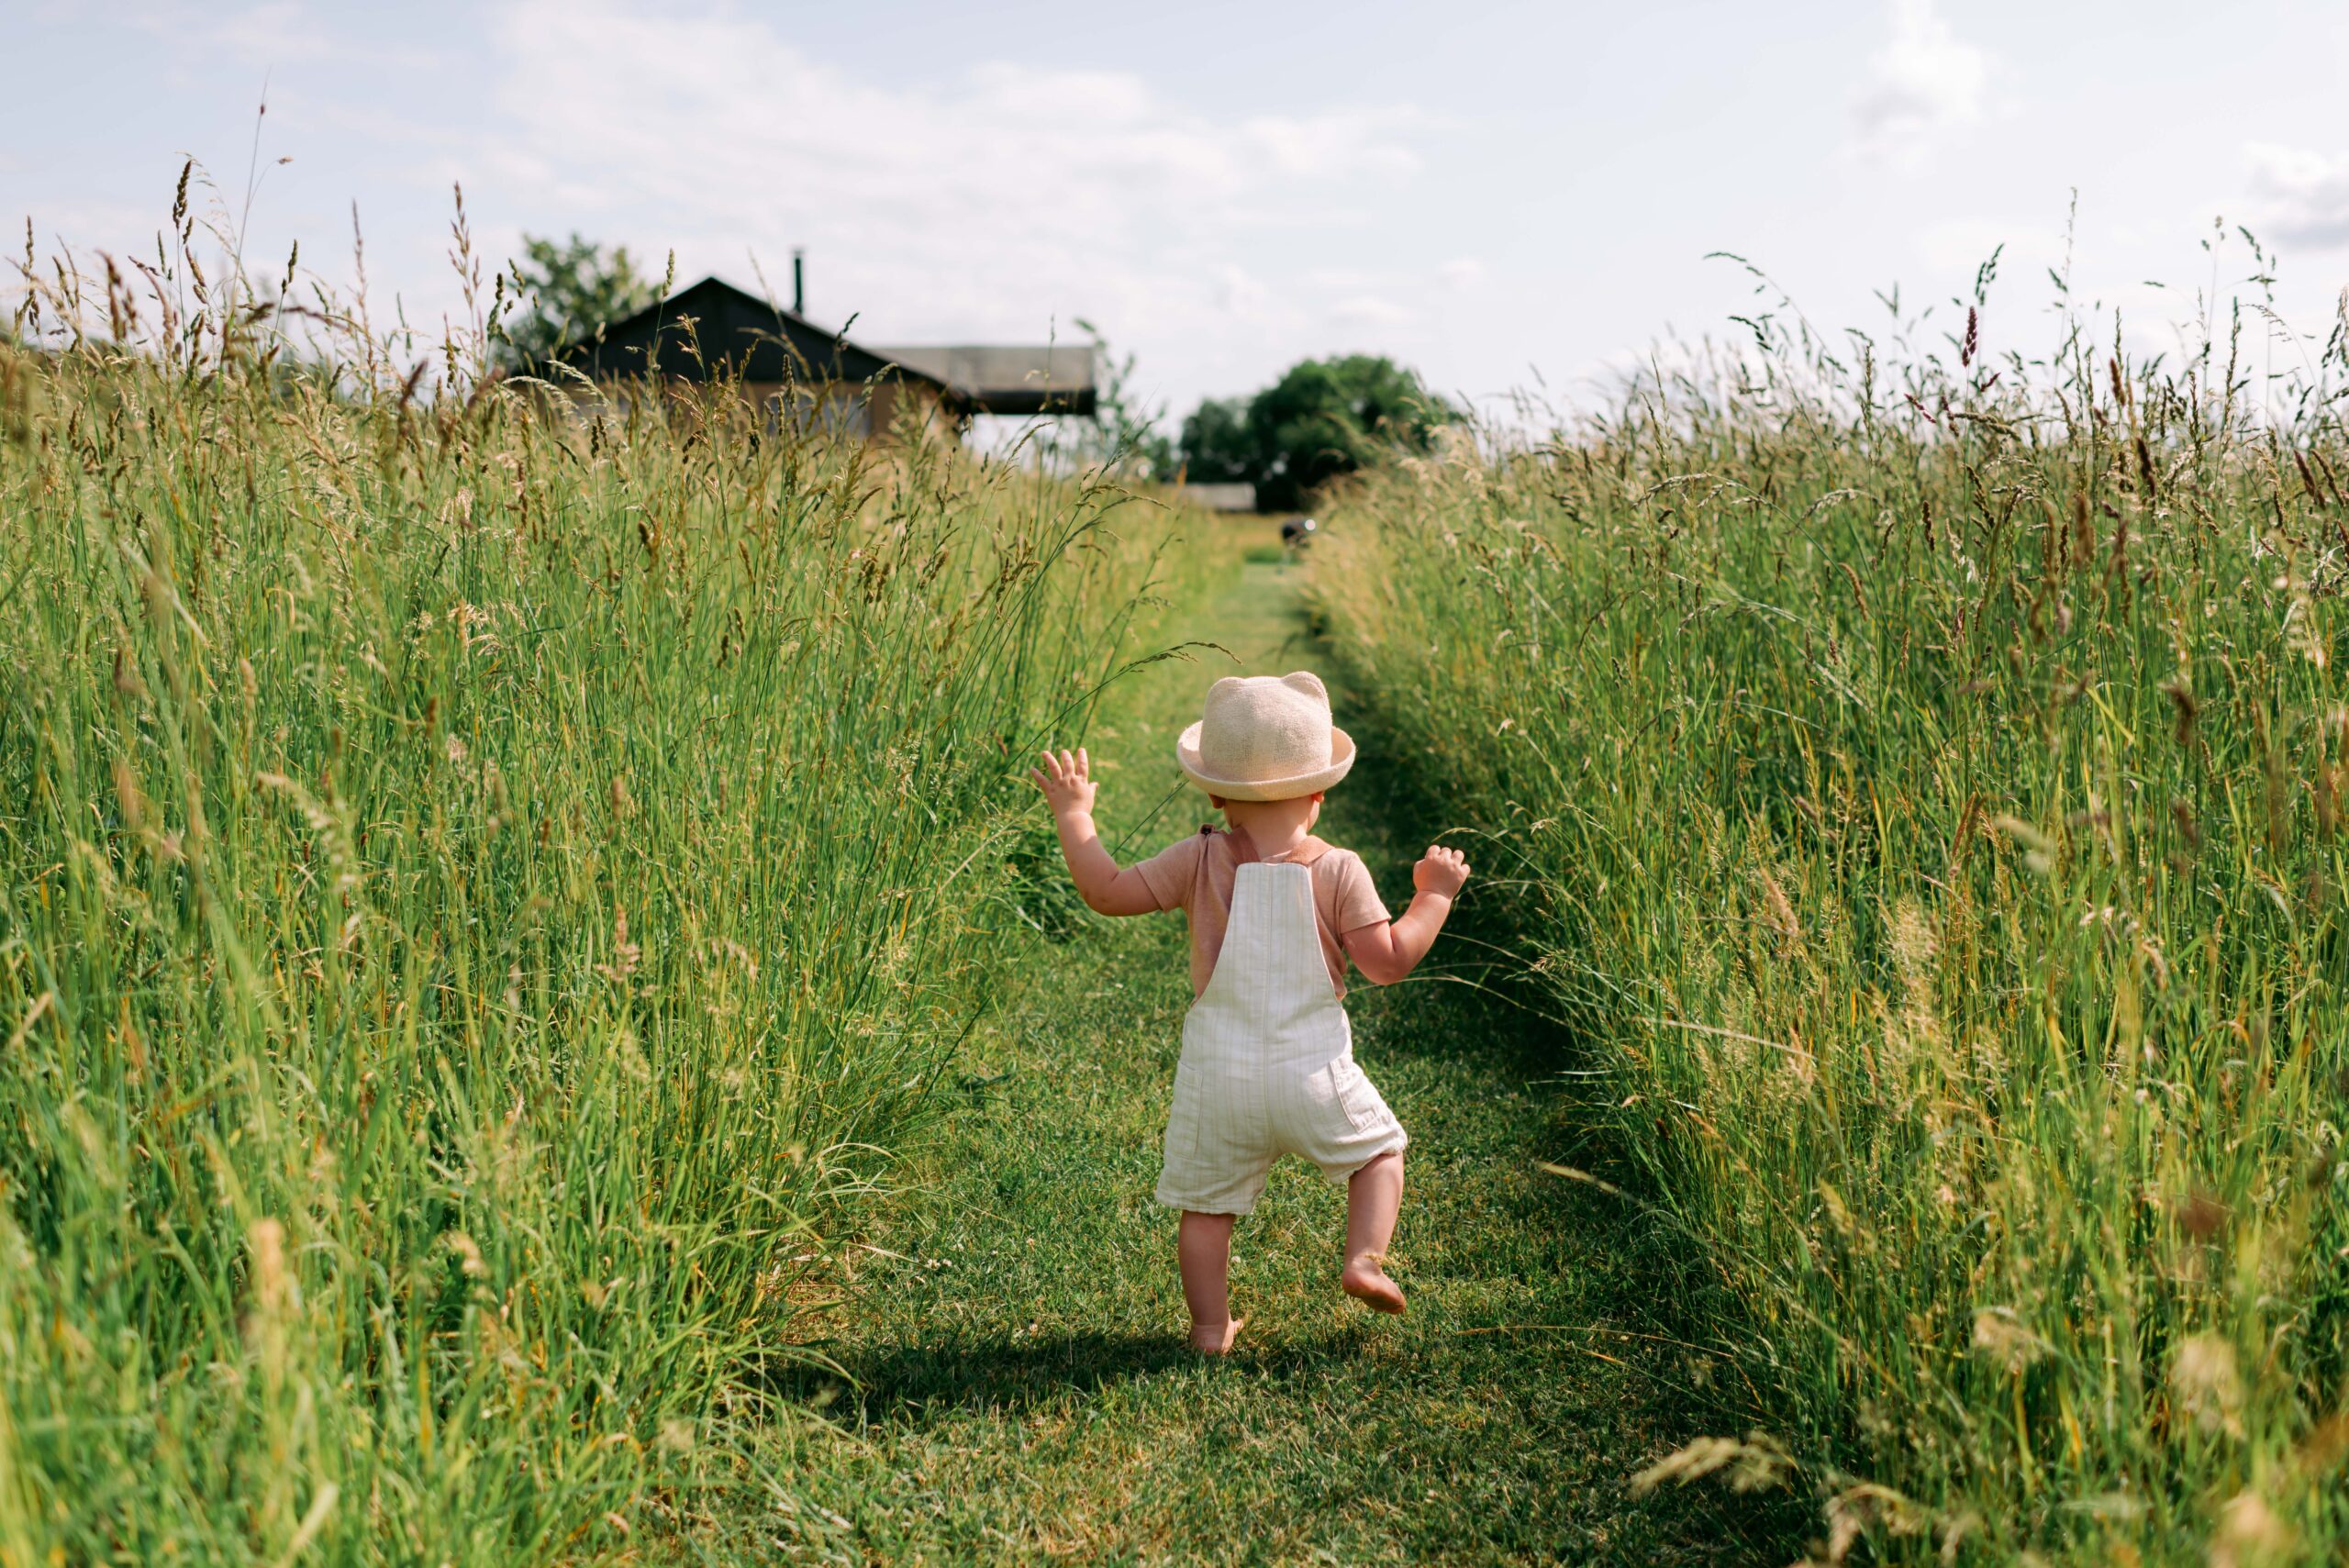 Toddler walking along the grass